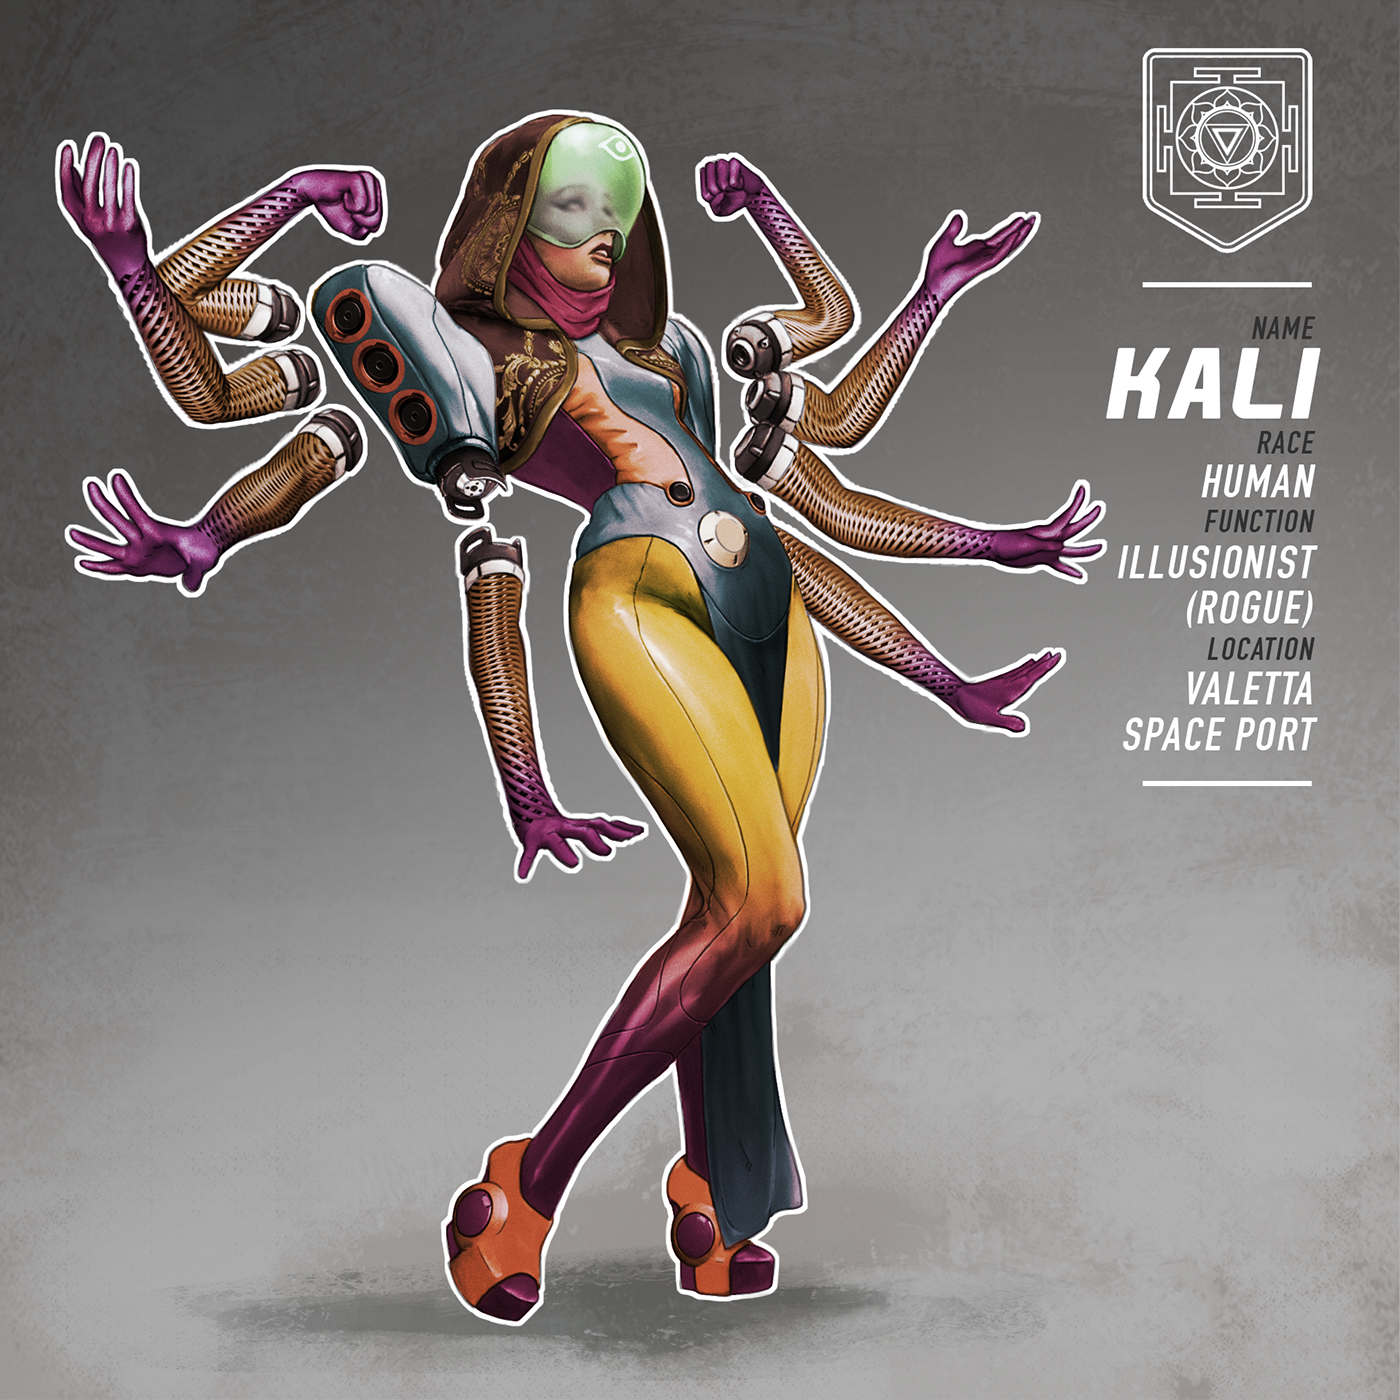 challenge Beyond Human Character design  sci-fi future Cyberpunk SPACE-OPERA alien robots mutants